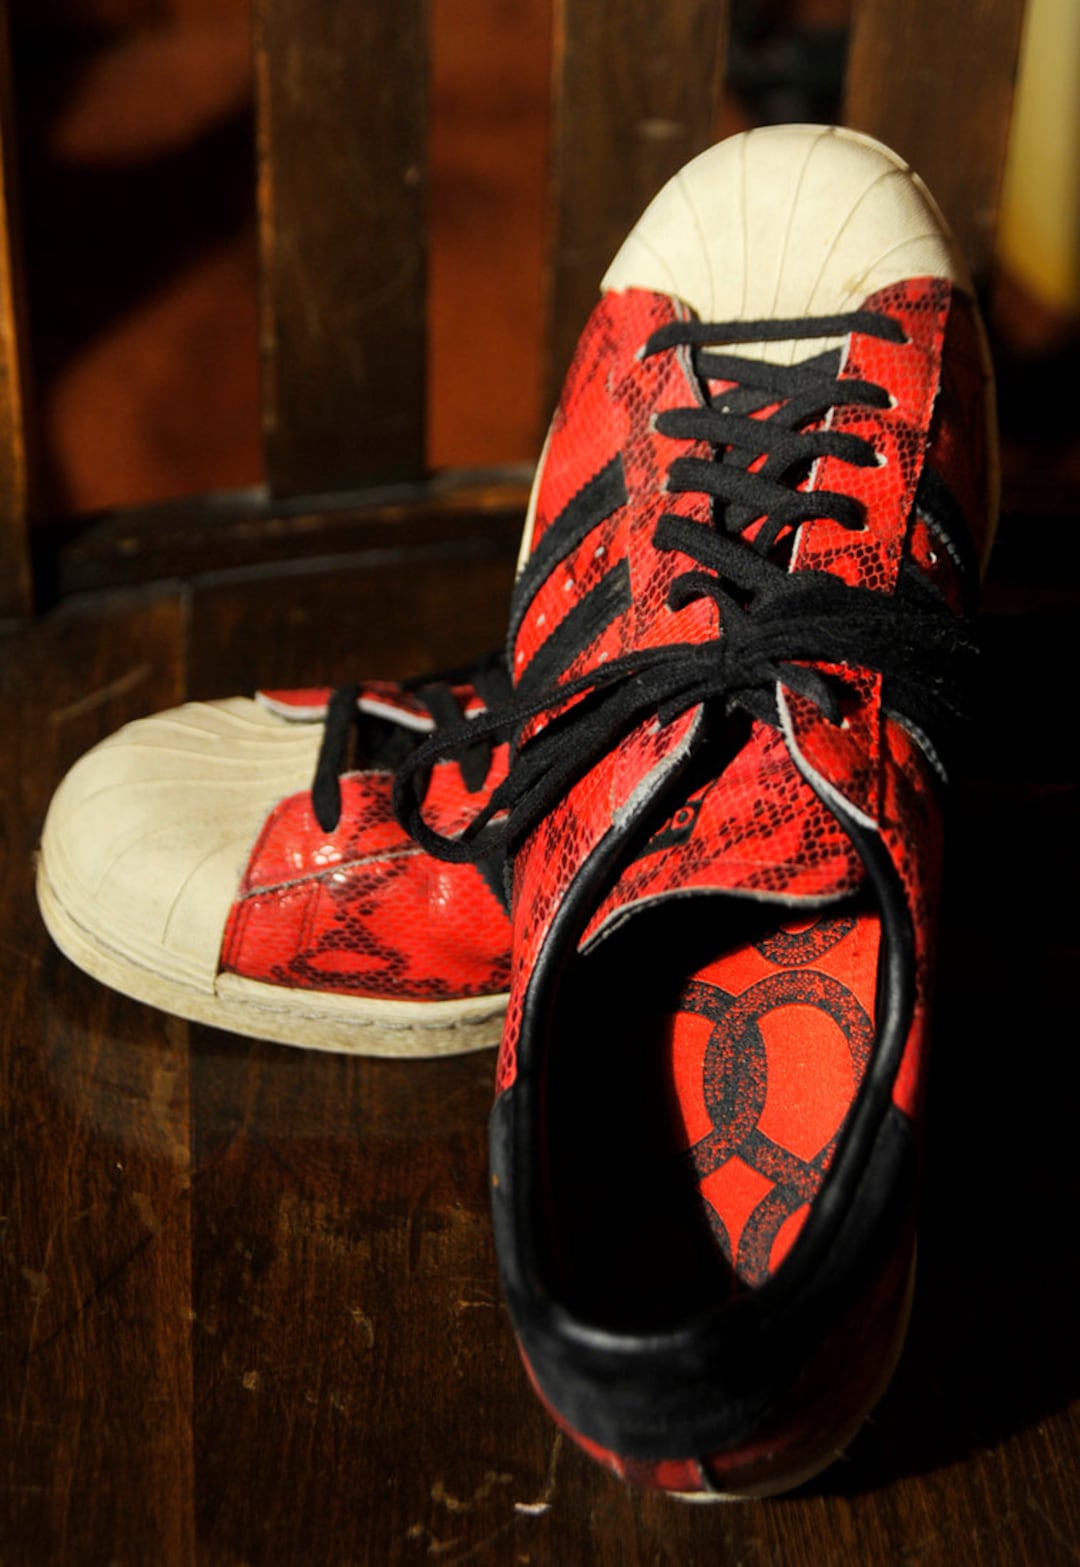 Editie Definitief samenwerken Rare and Classic Adidas Superstar Red Leather Snakeskin Year - Etsy